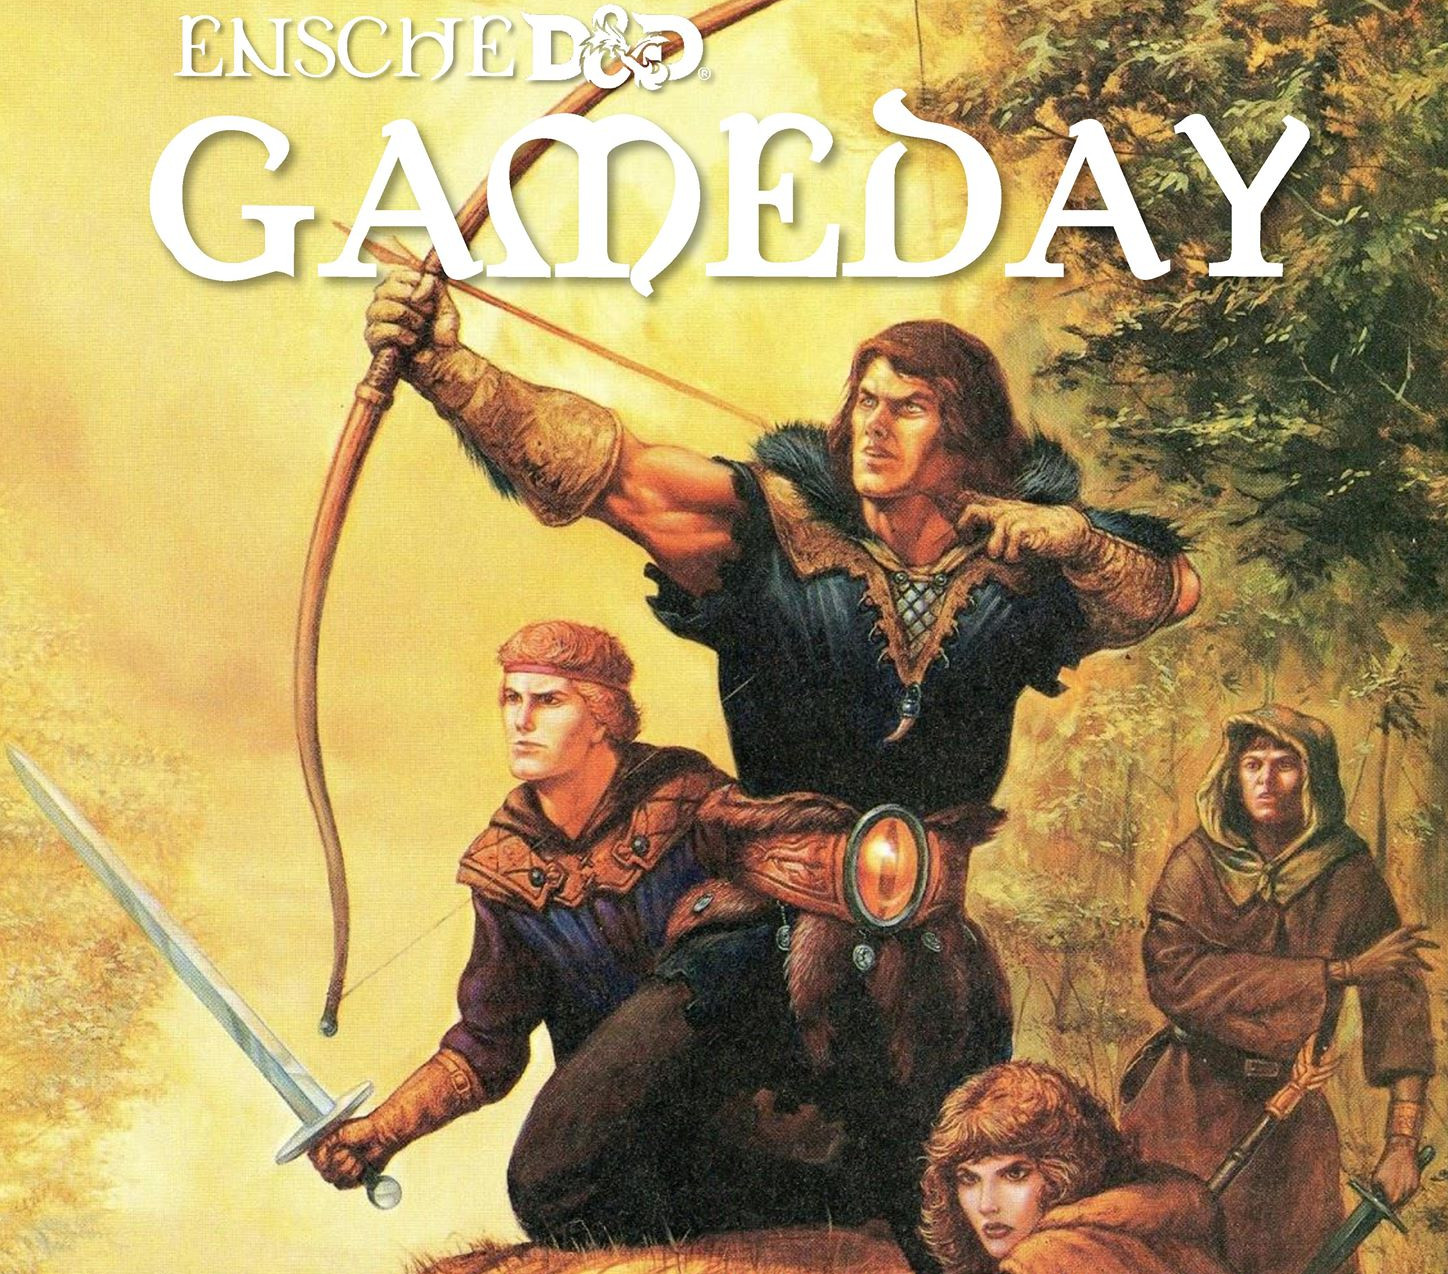 EnscheD&D Gameday